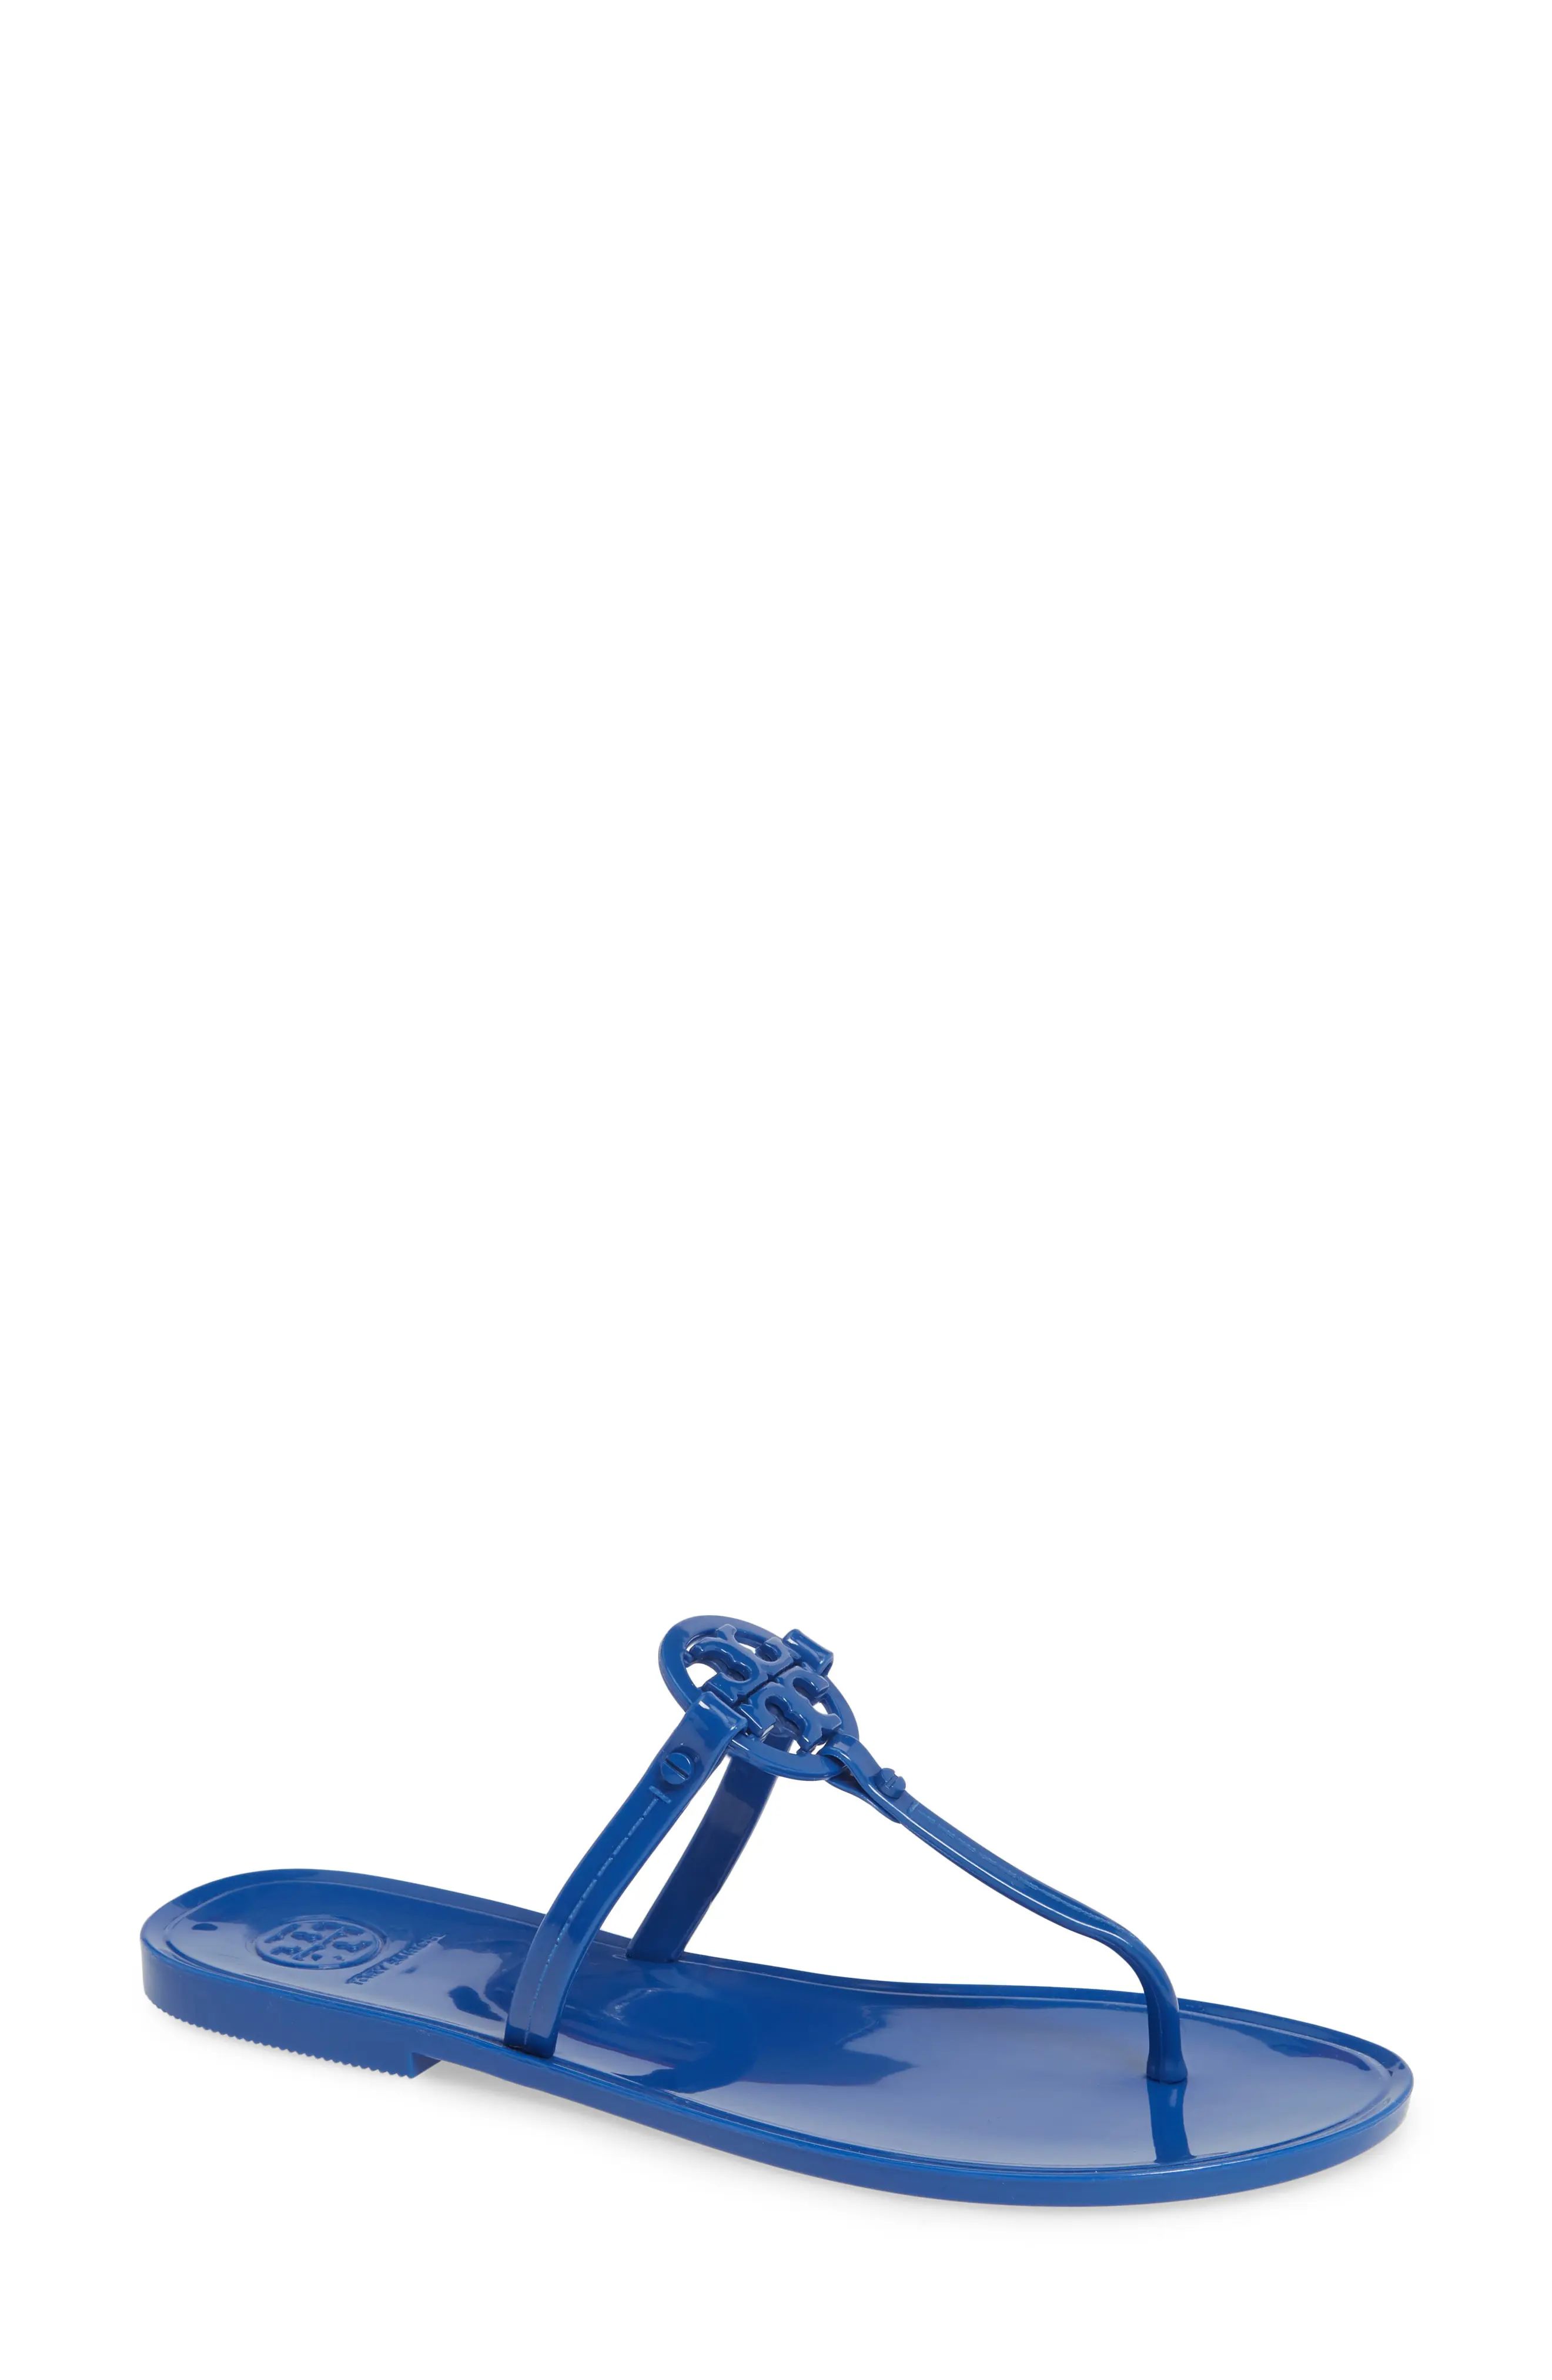 Women's Tory Burch 'Mini Miller' Flat Sandal, Size 5 M - Blue | Nordstrom